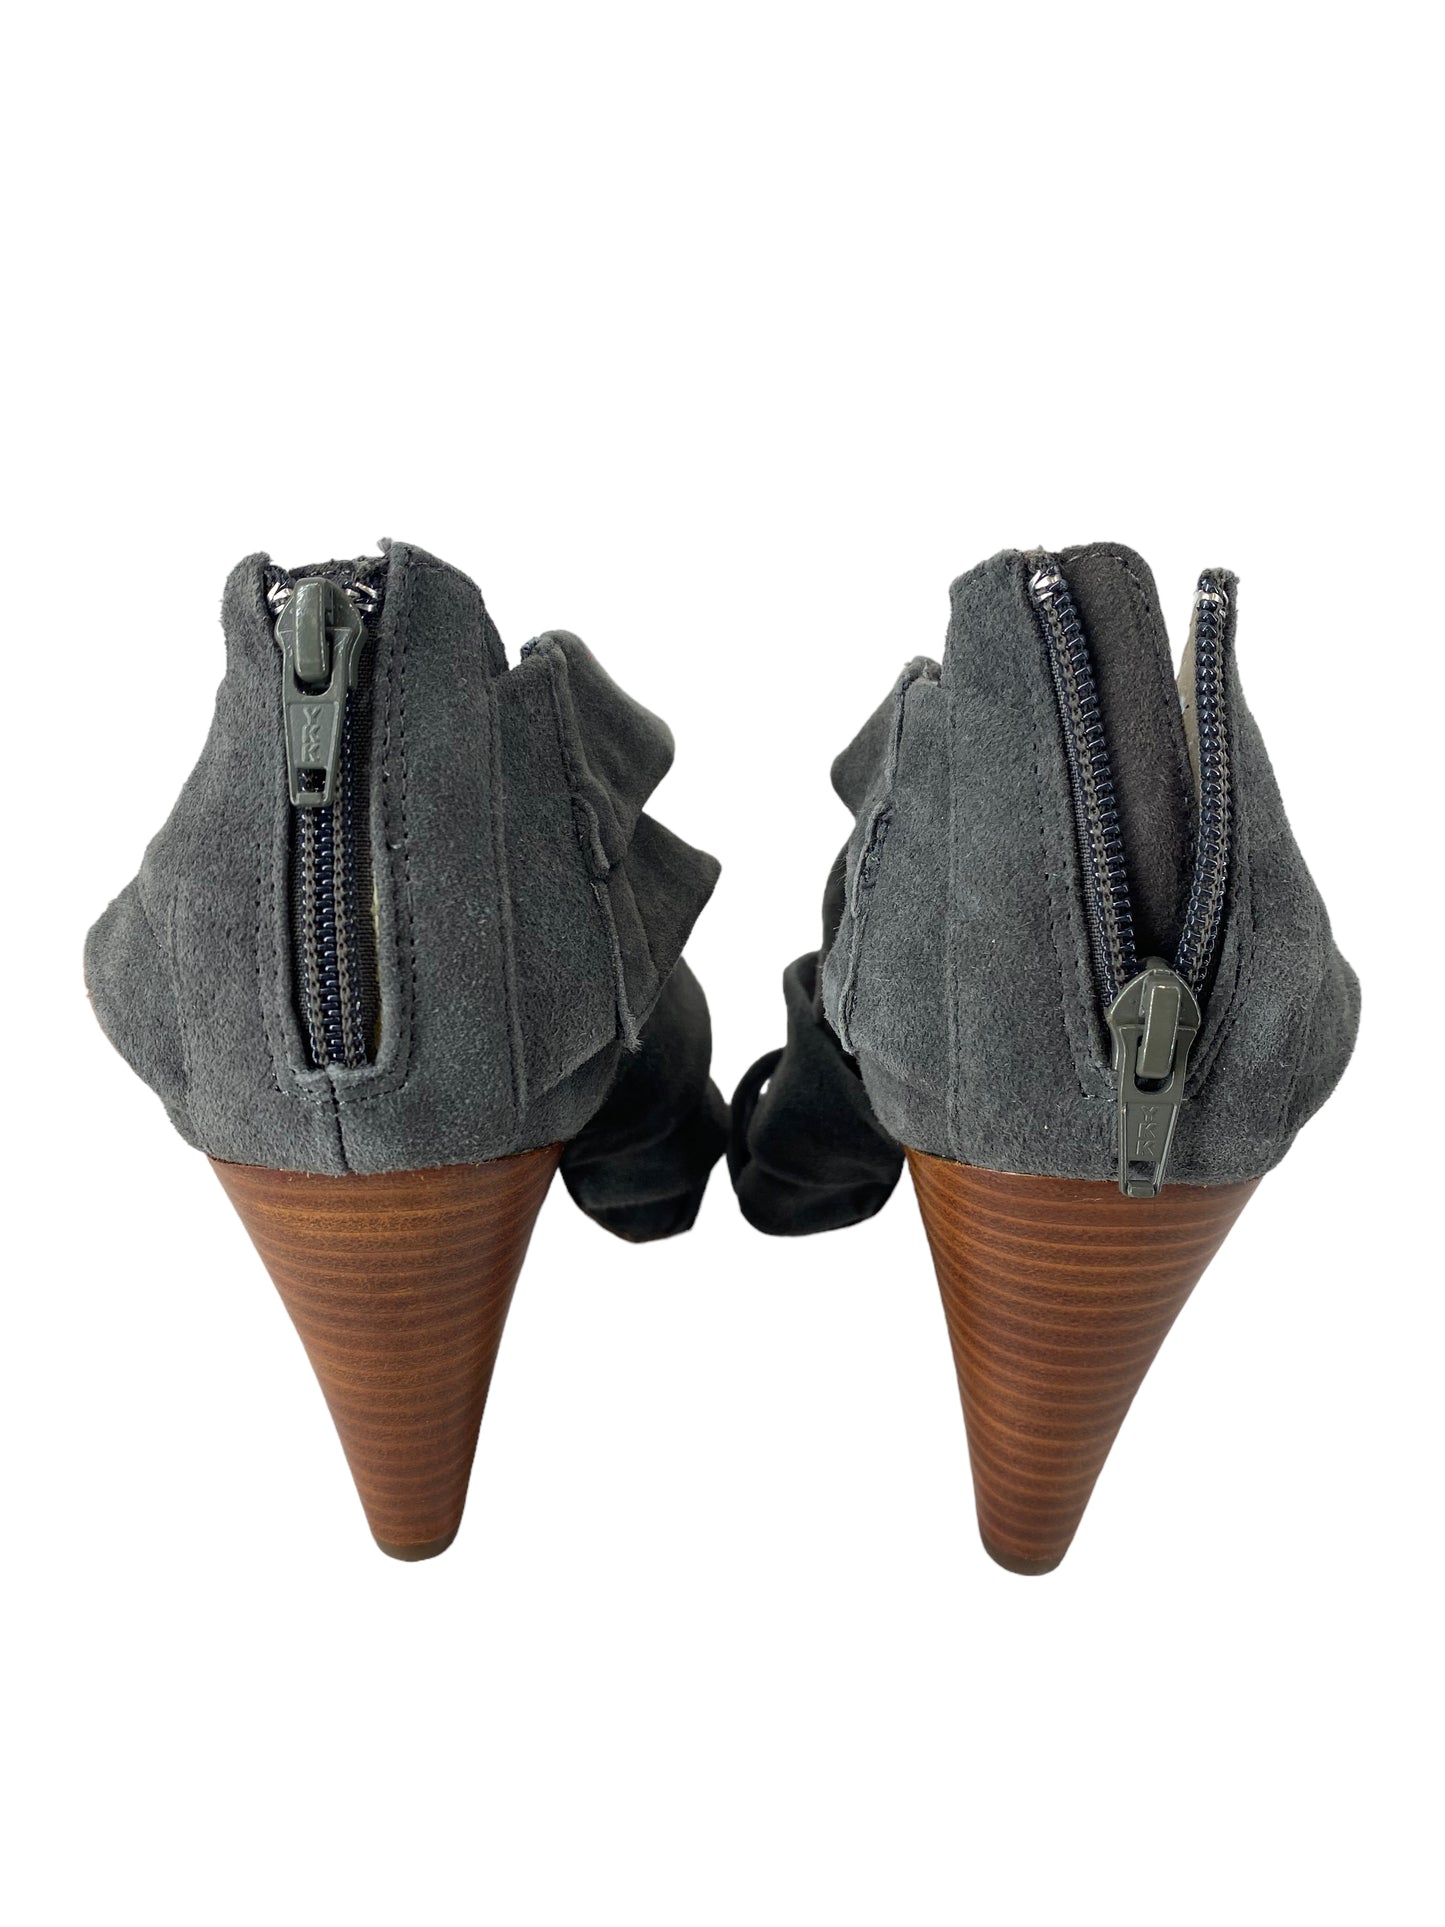 Shoes Heels Block By Seychelles  Size: 8